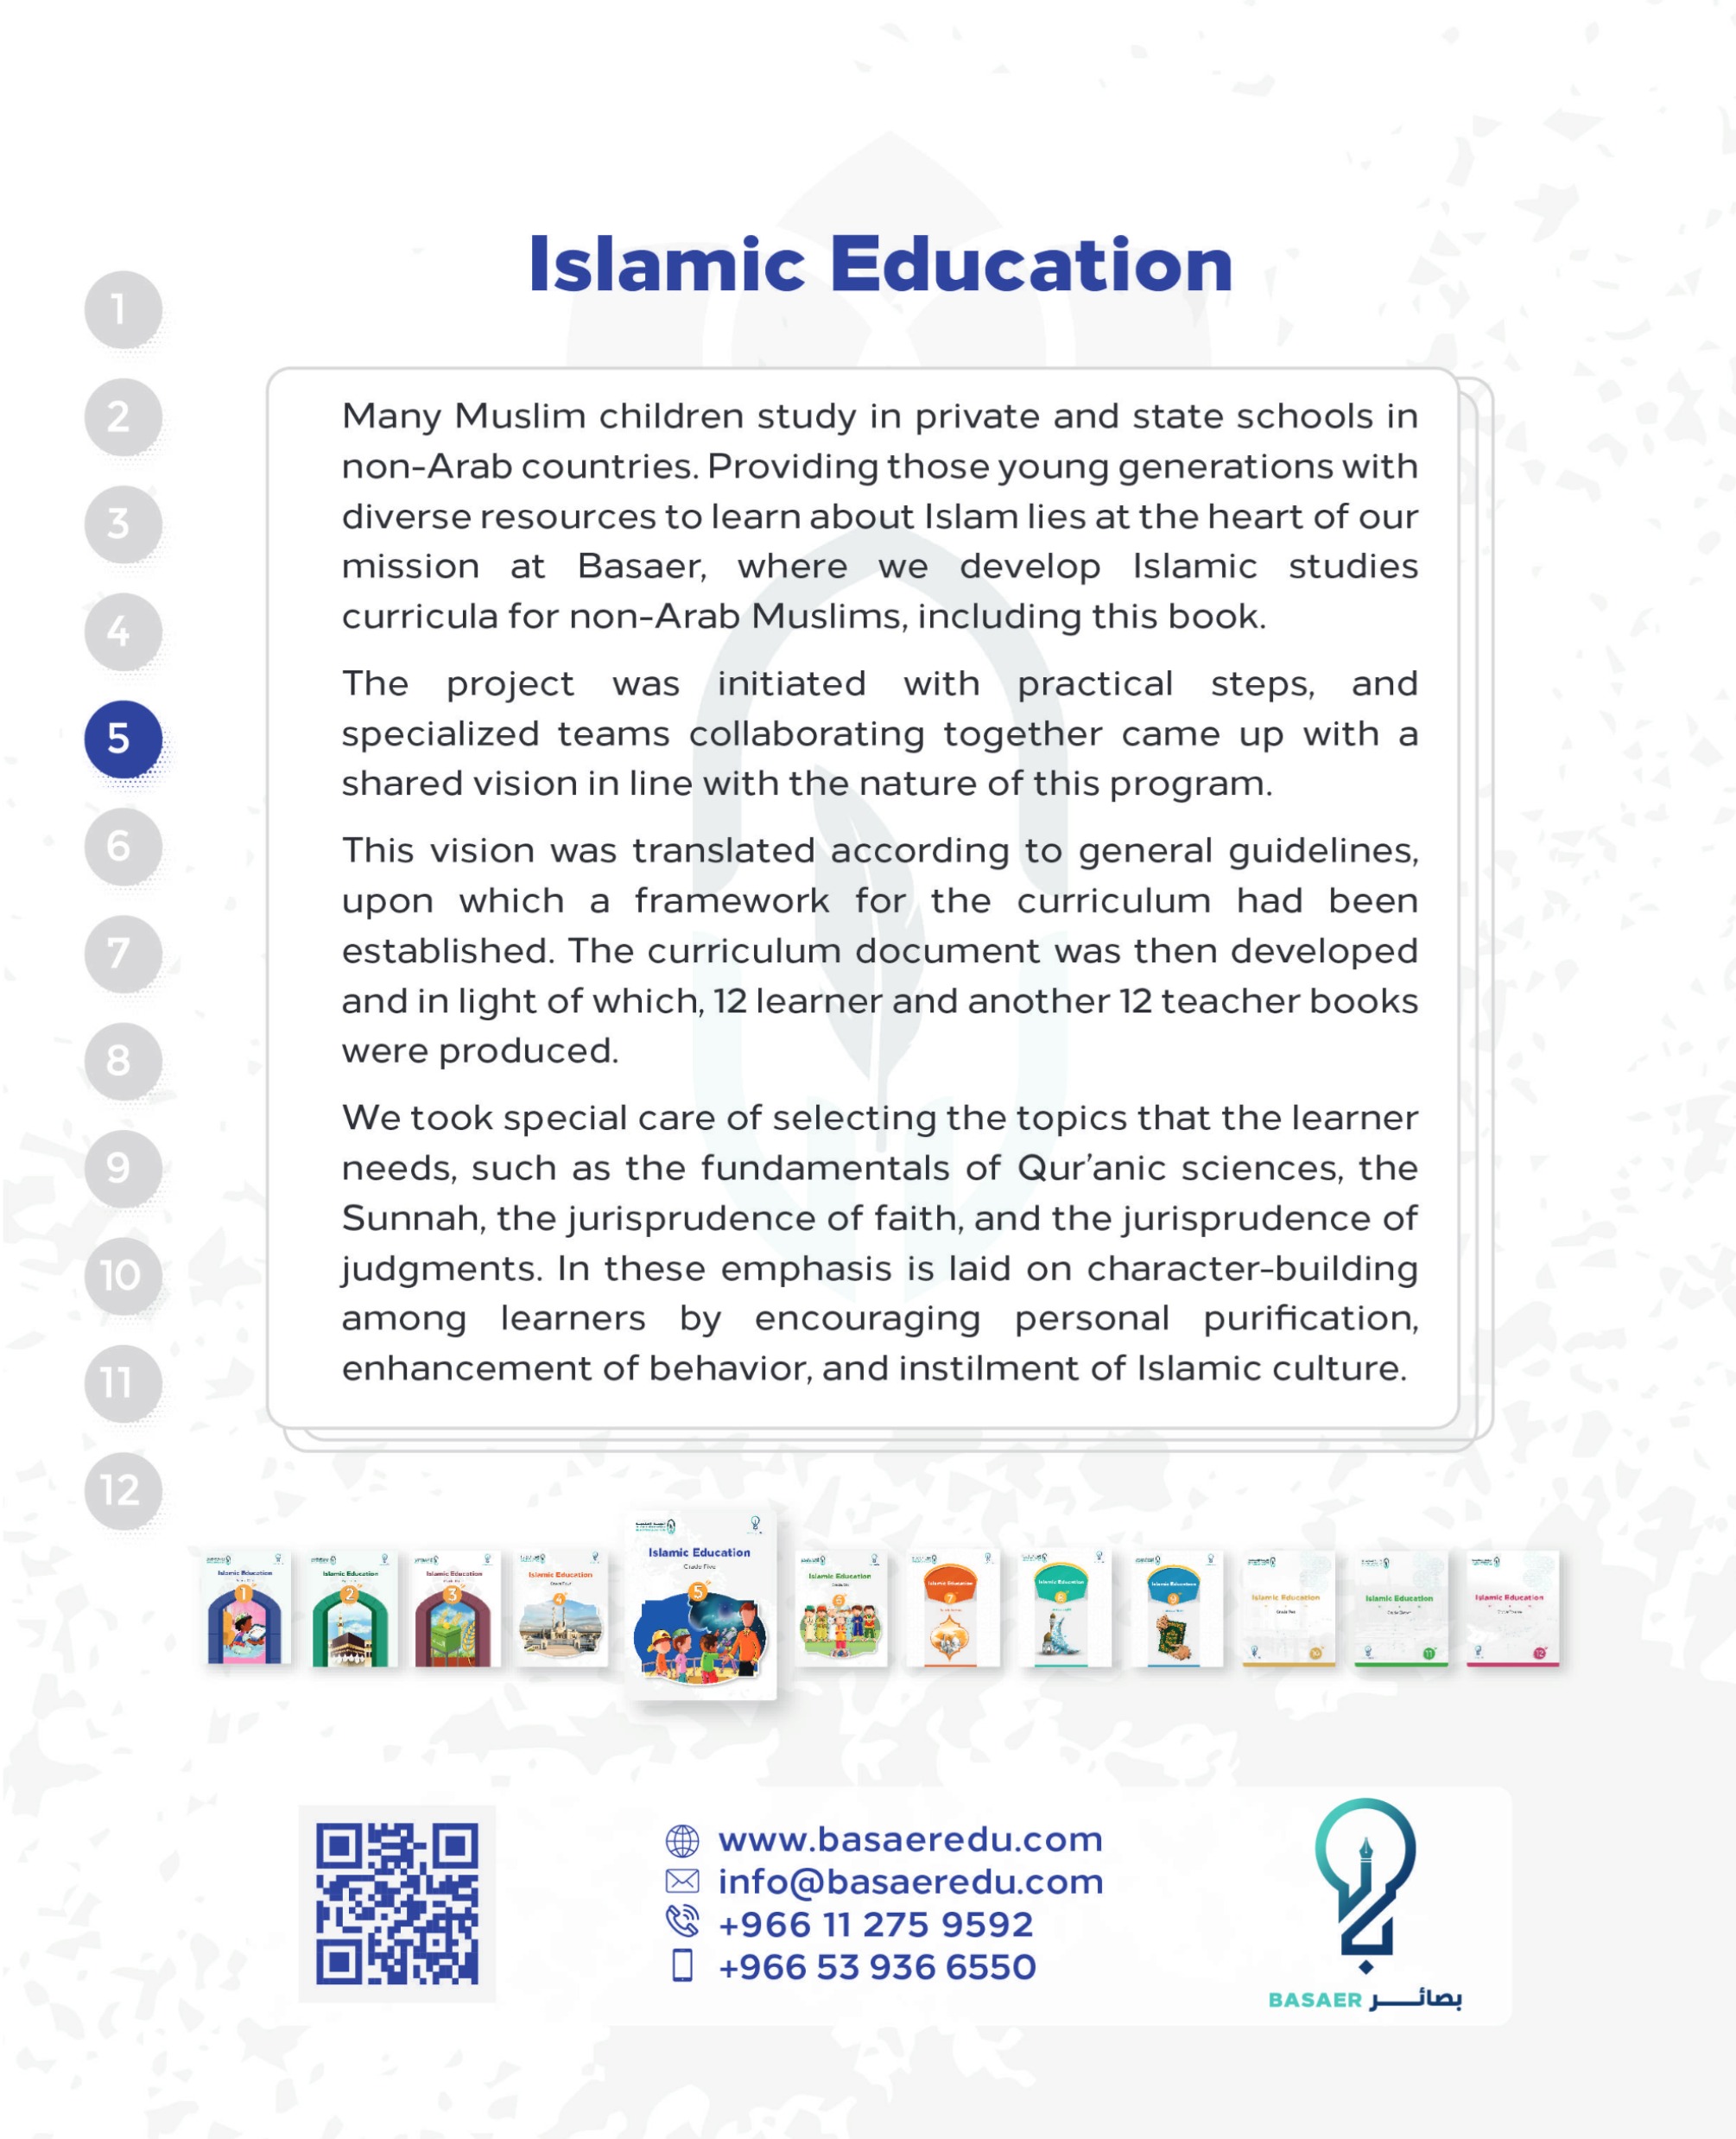 (5) Islamic Education